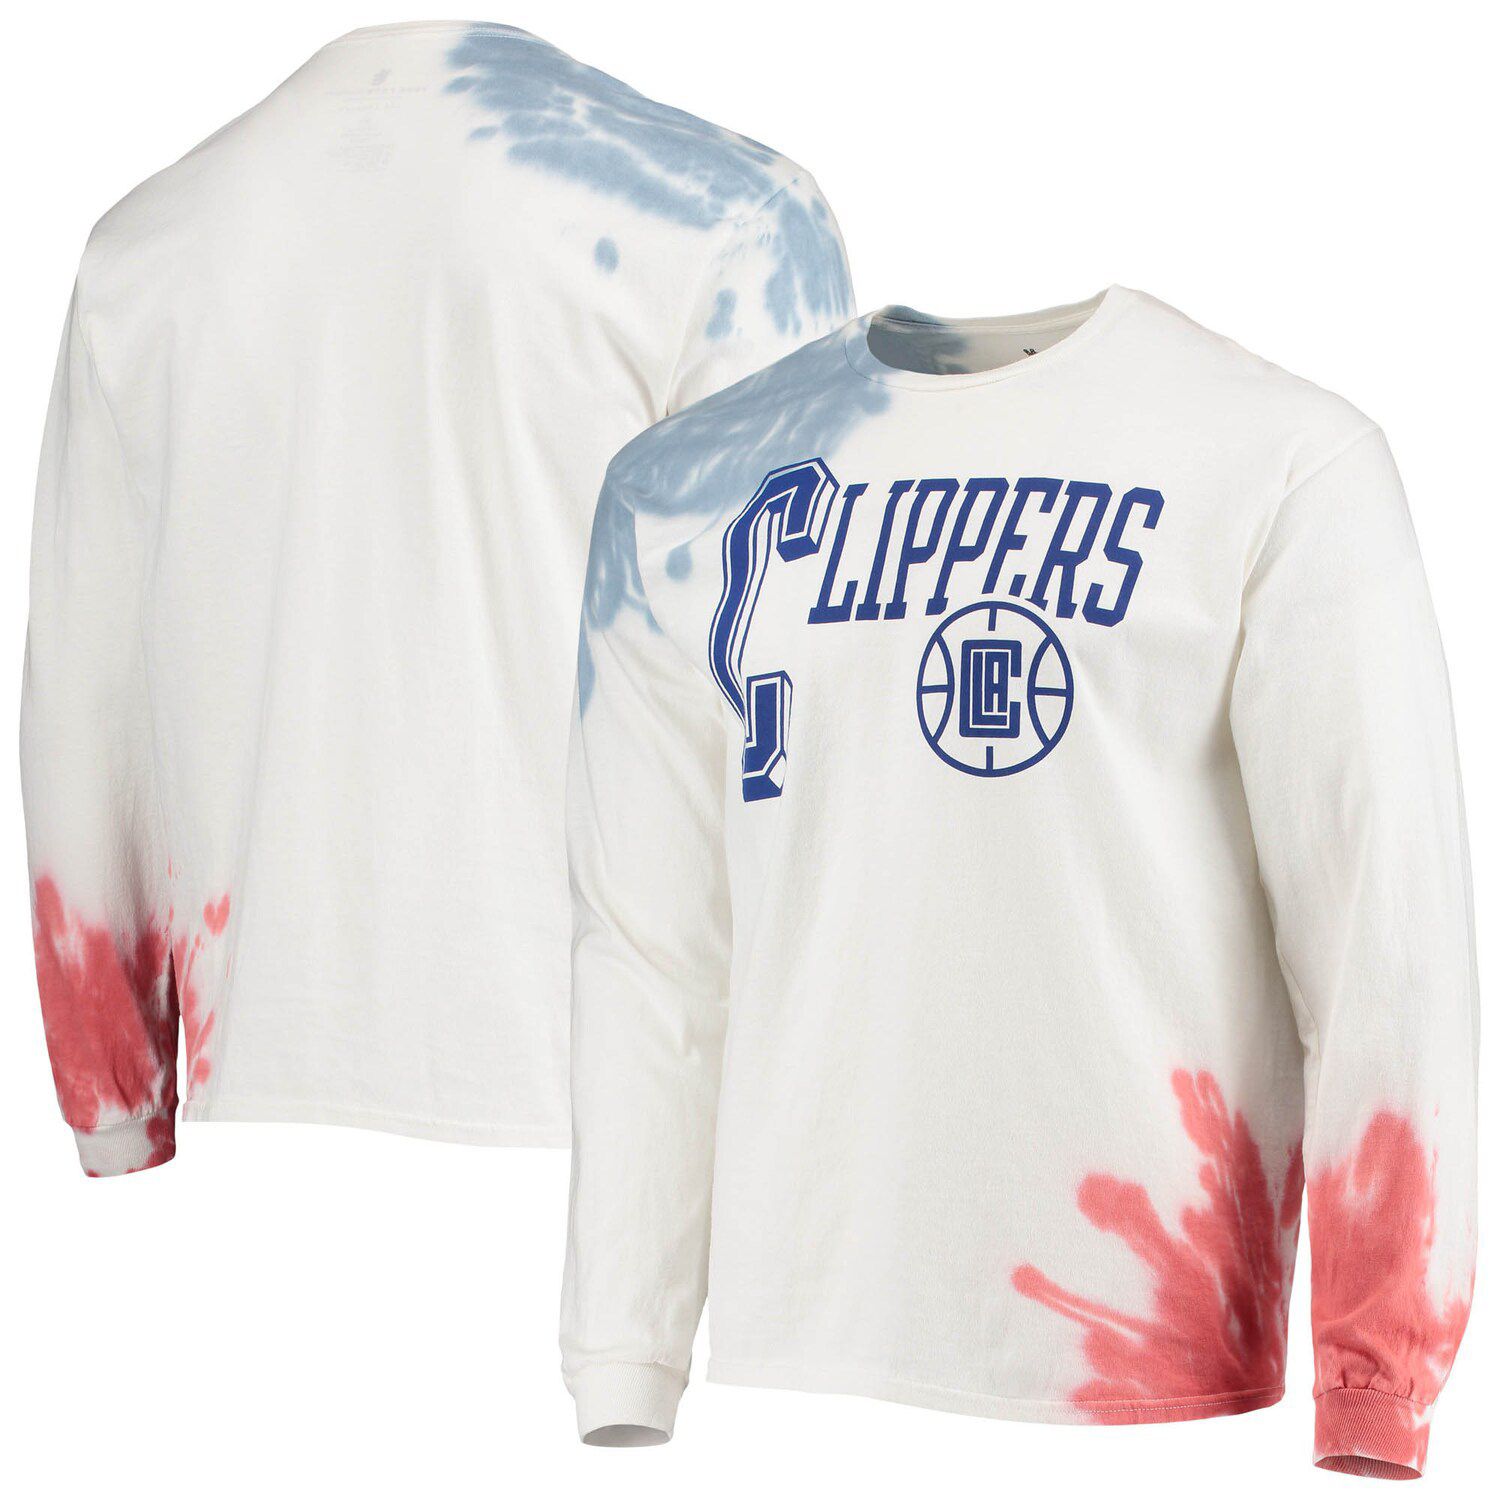 Men's LA Clippers Nike Royal Long Sleeve Shooting Performance Shirt